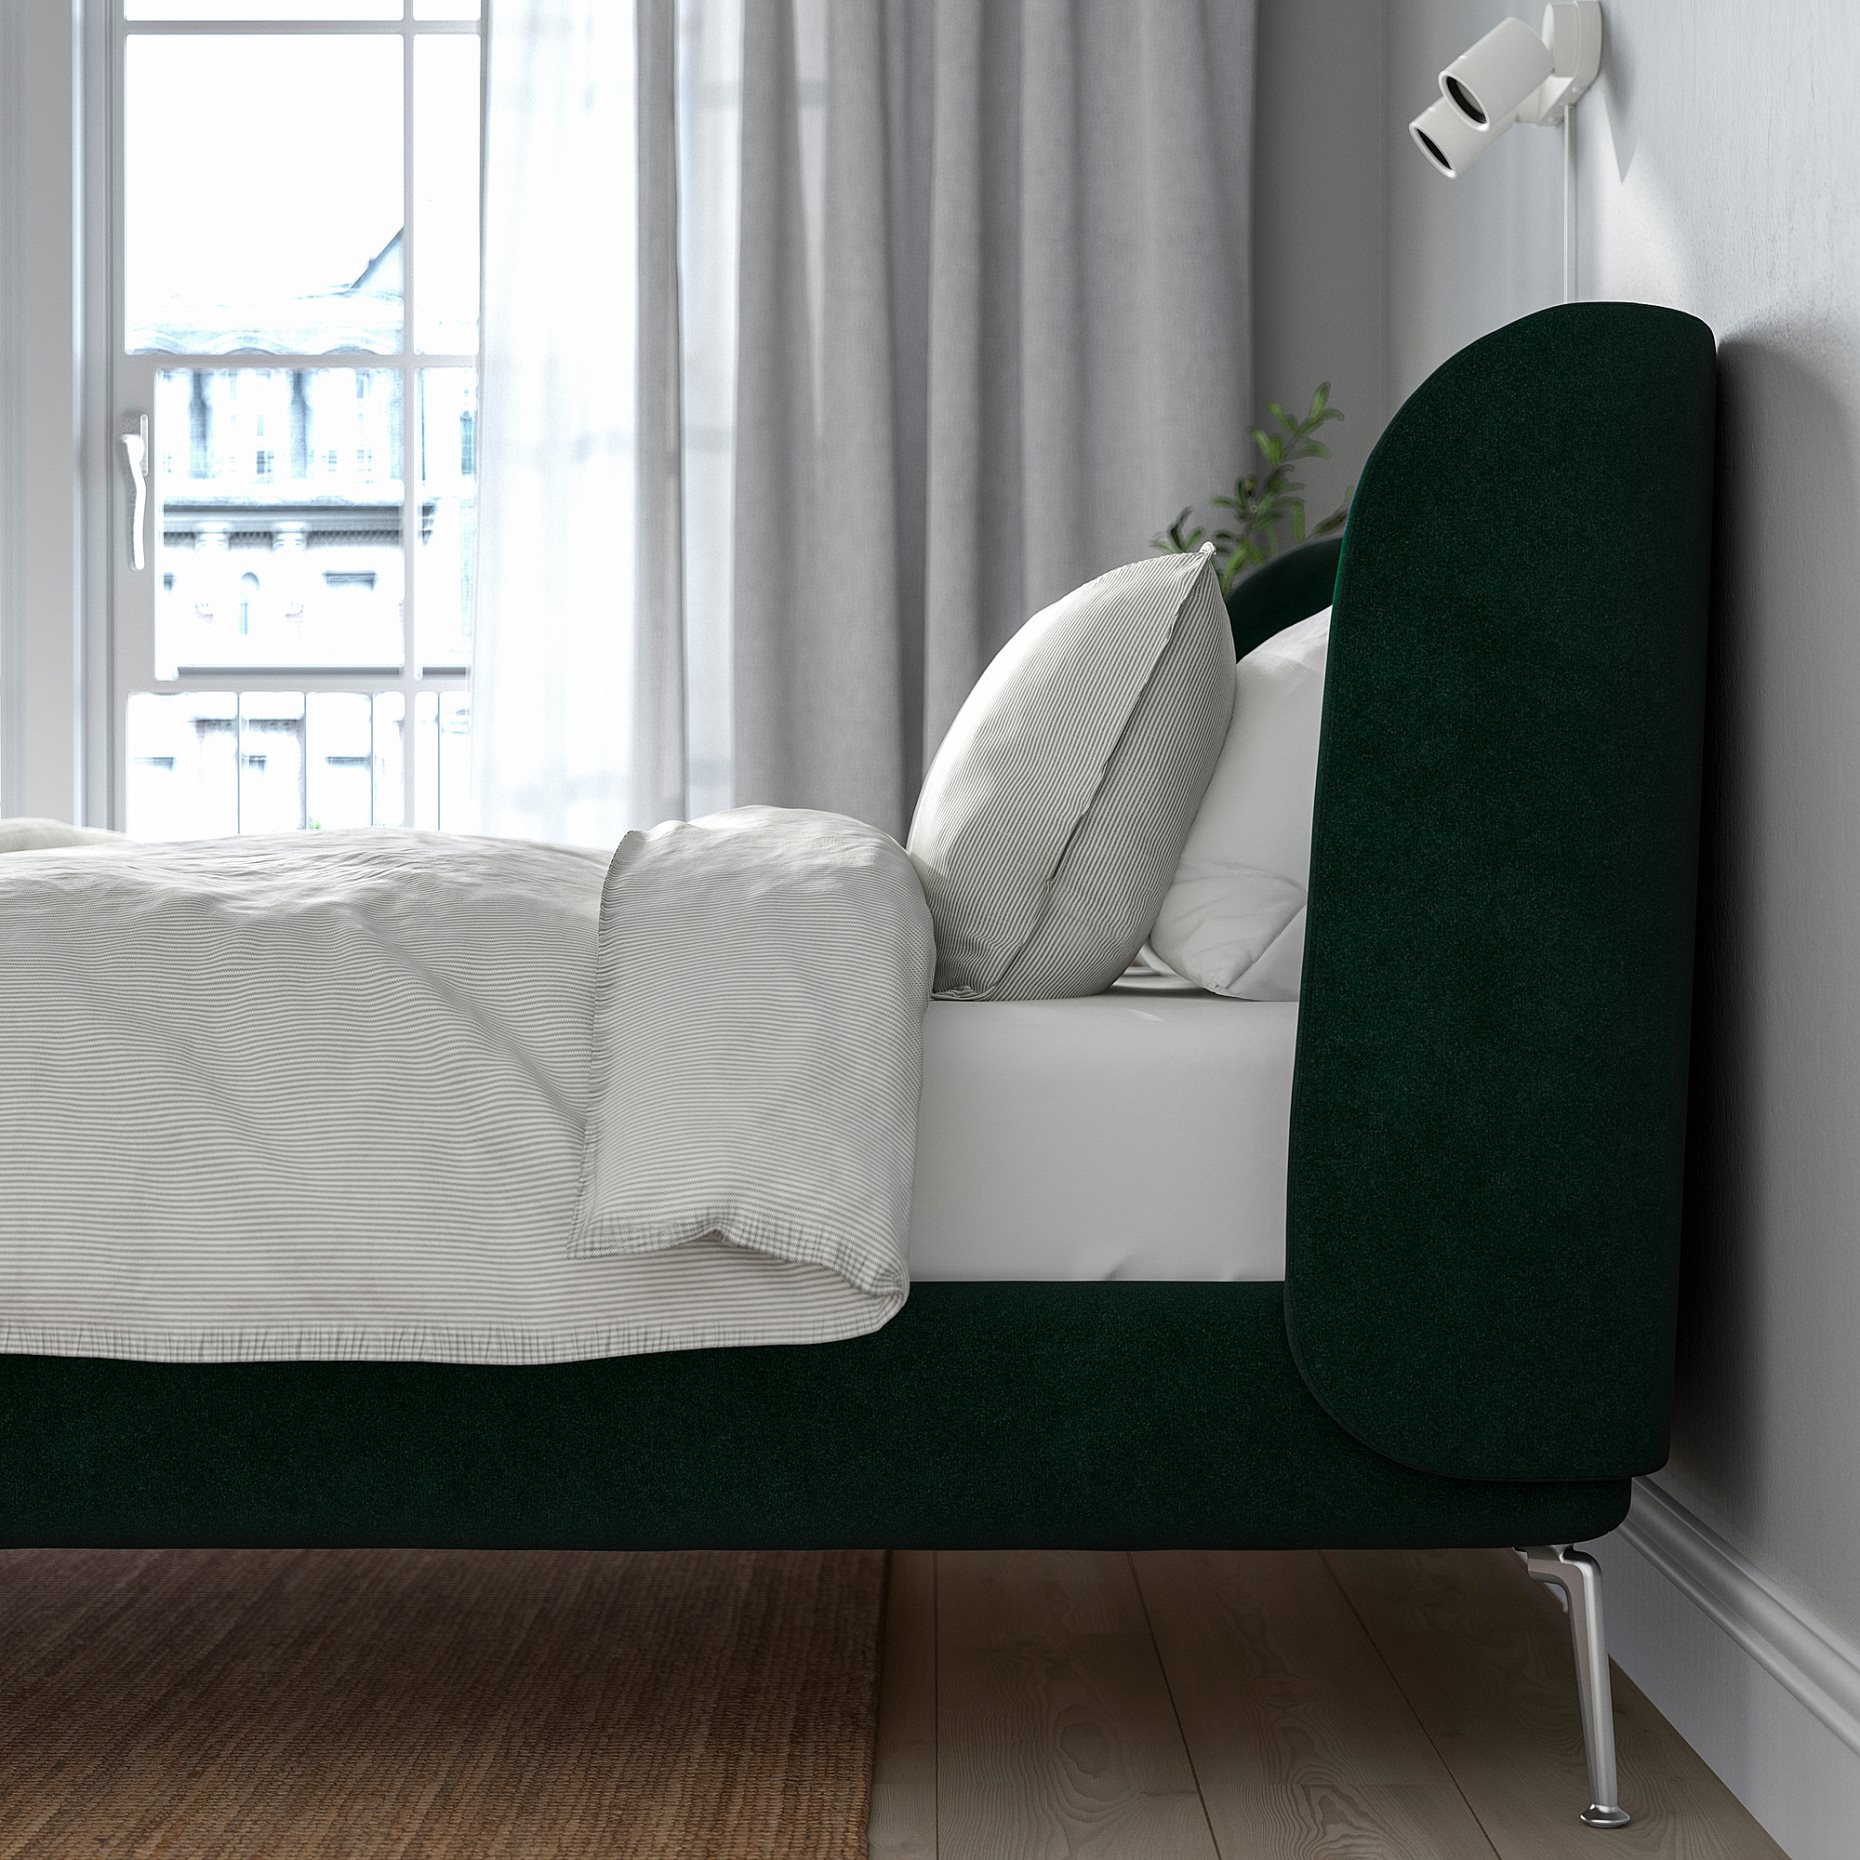 TUFJORD, κρεβάτι με επένδυση, 160x200 cm, 104.464.11